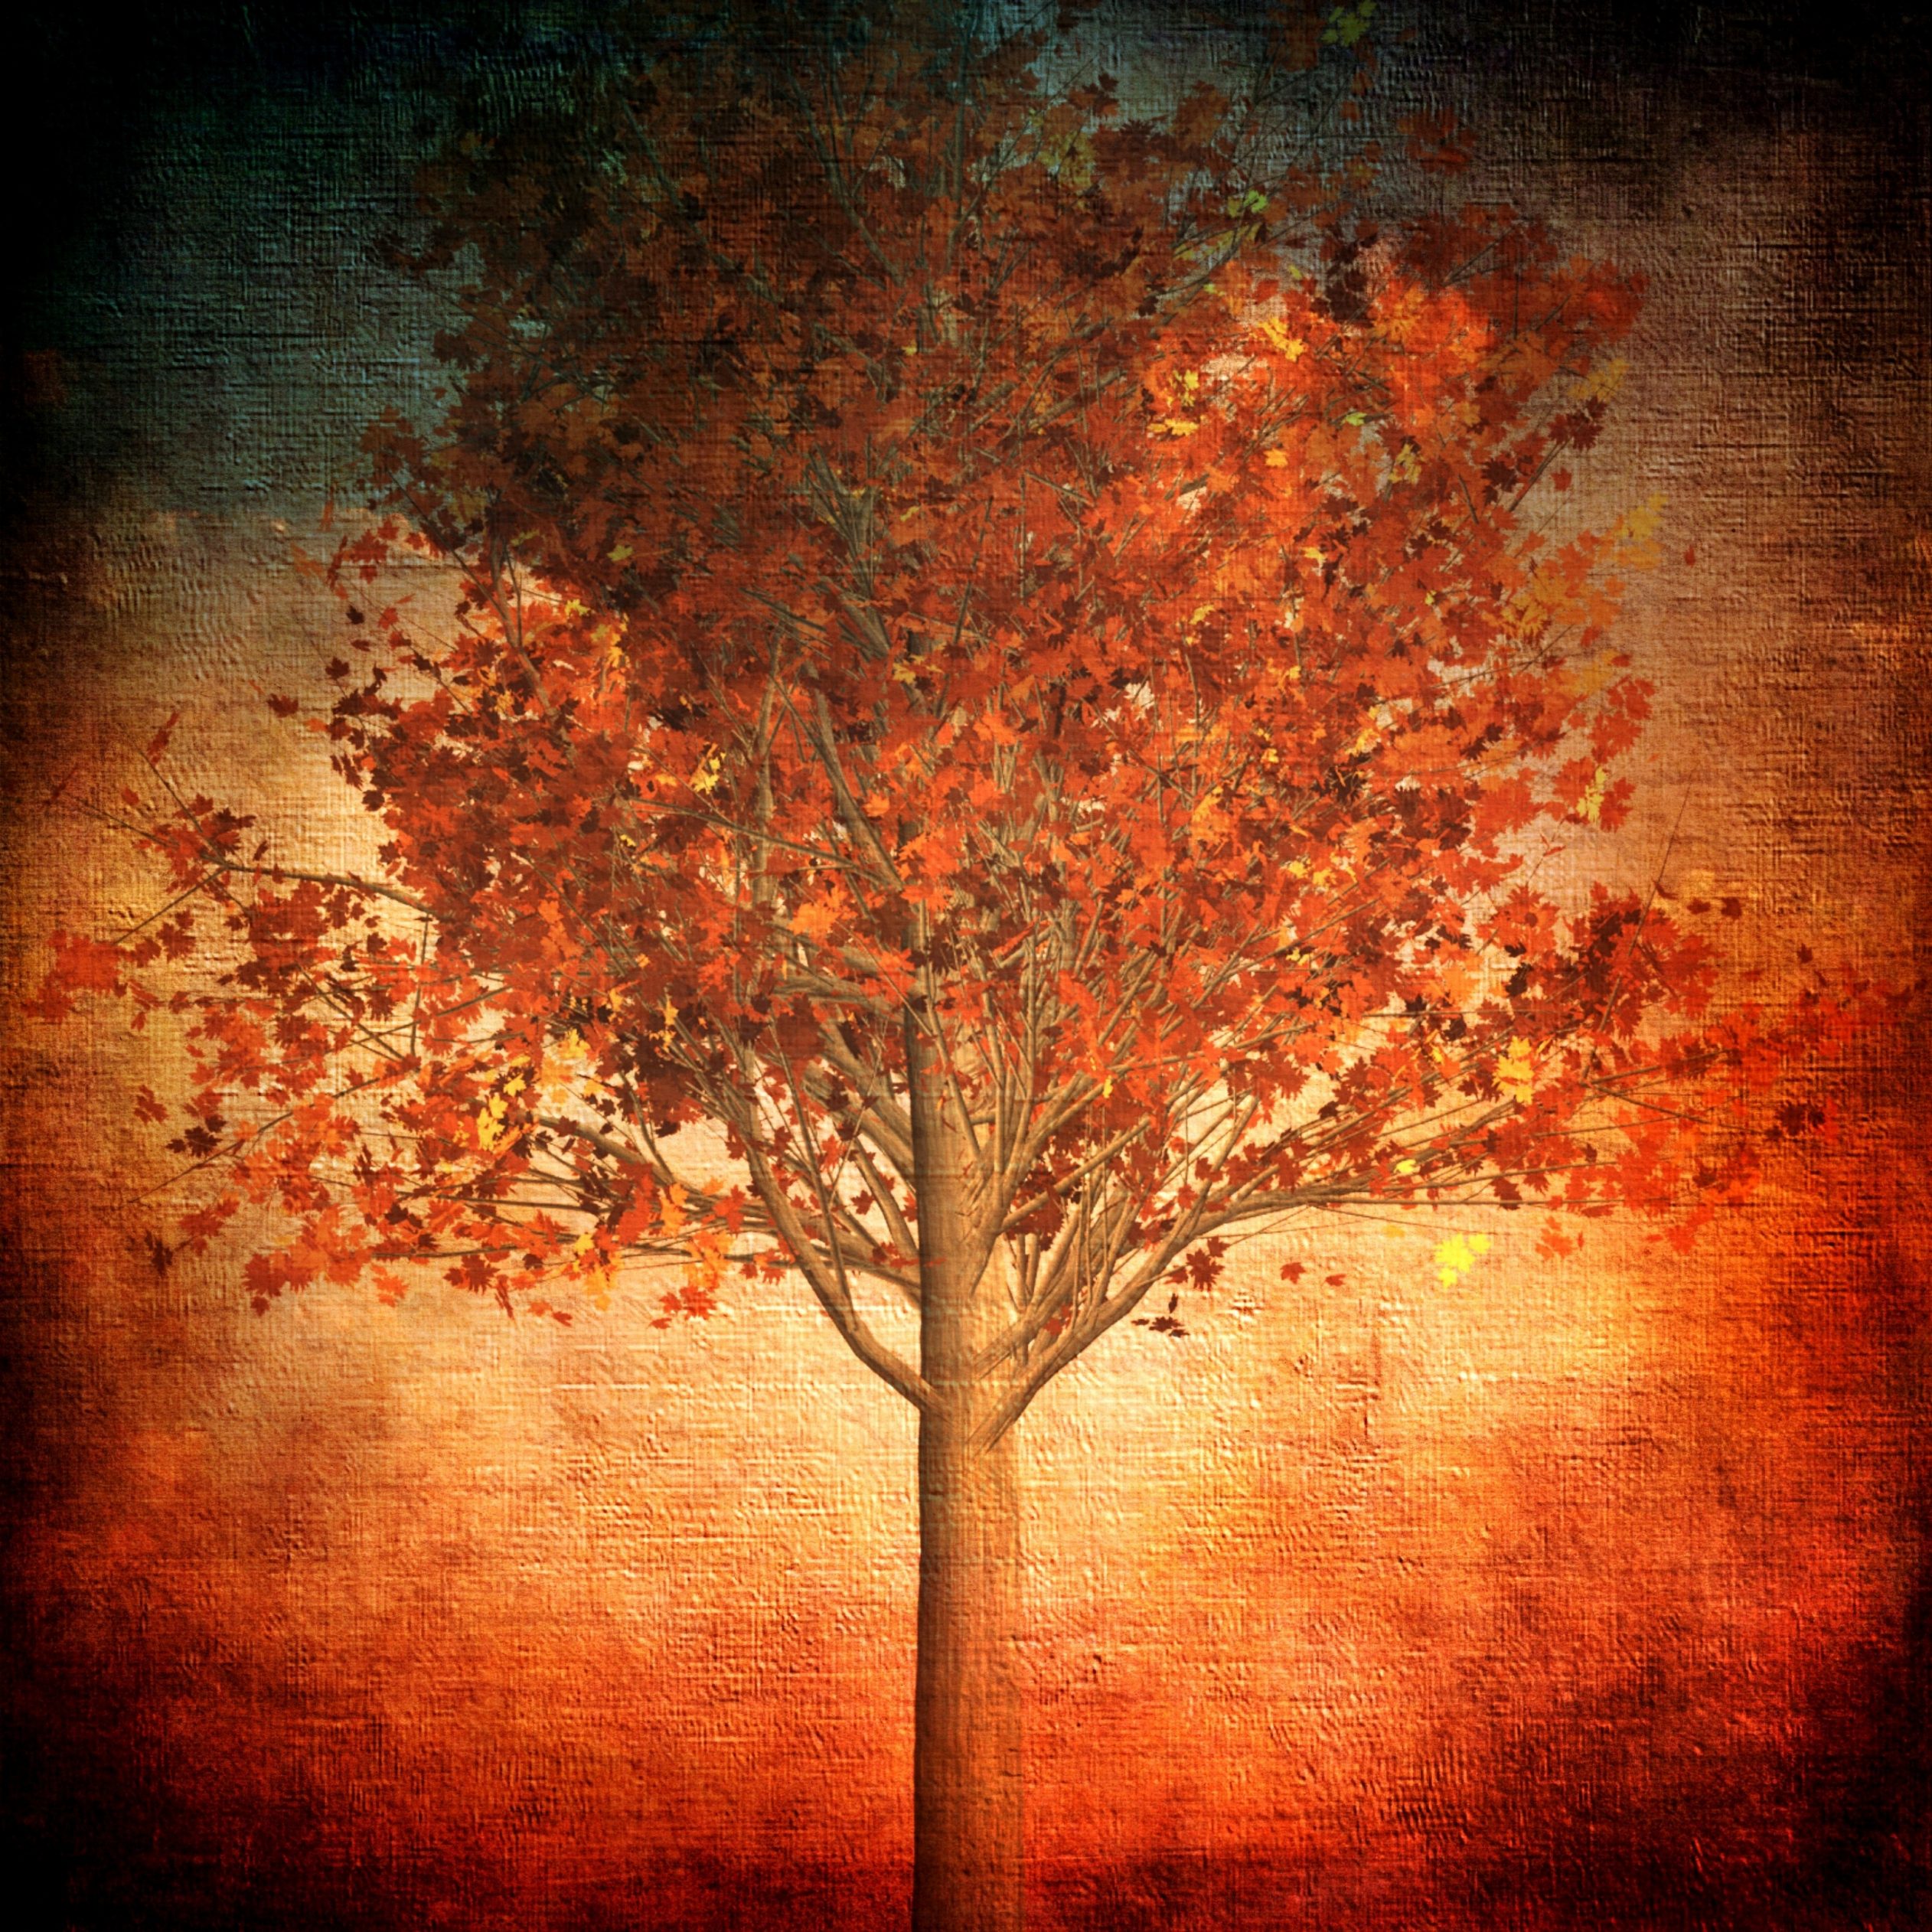 2524x2524 Parallax wallpaper 4k Aesthetic Autumn Red Fall Leaves Nature iPad Wallpaper 2524x2524 pixels resolution